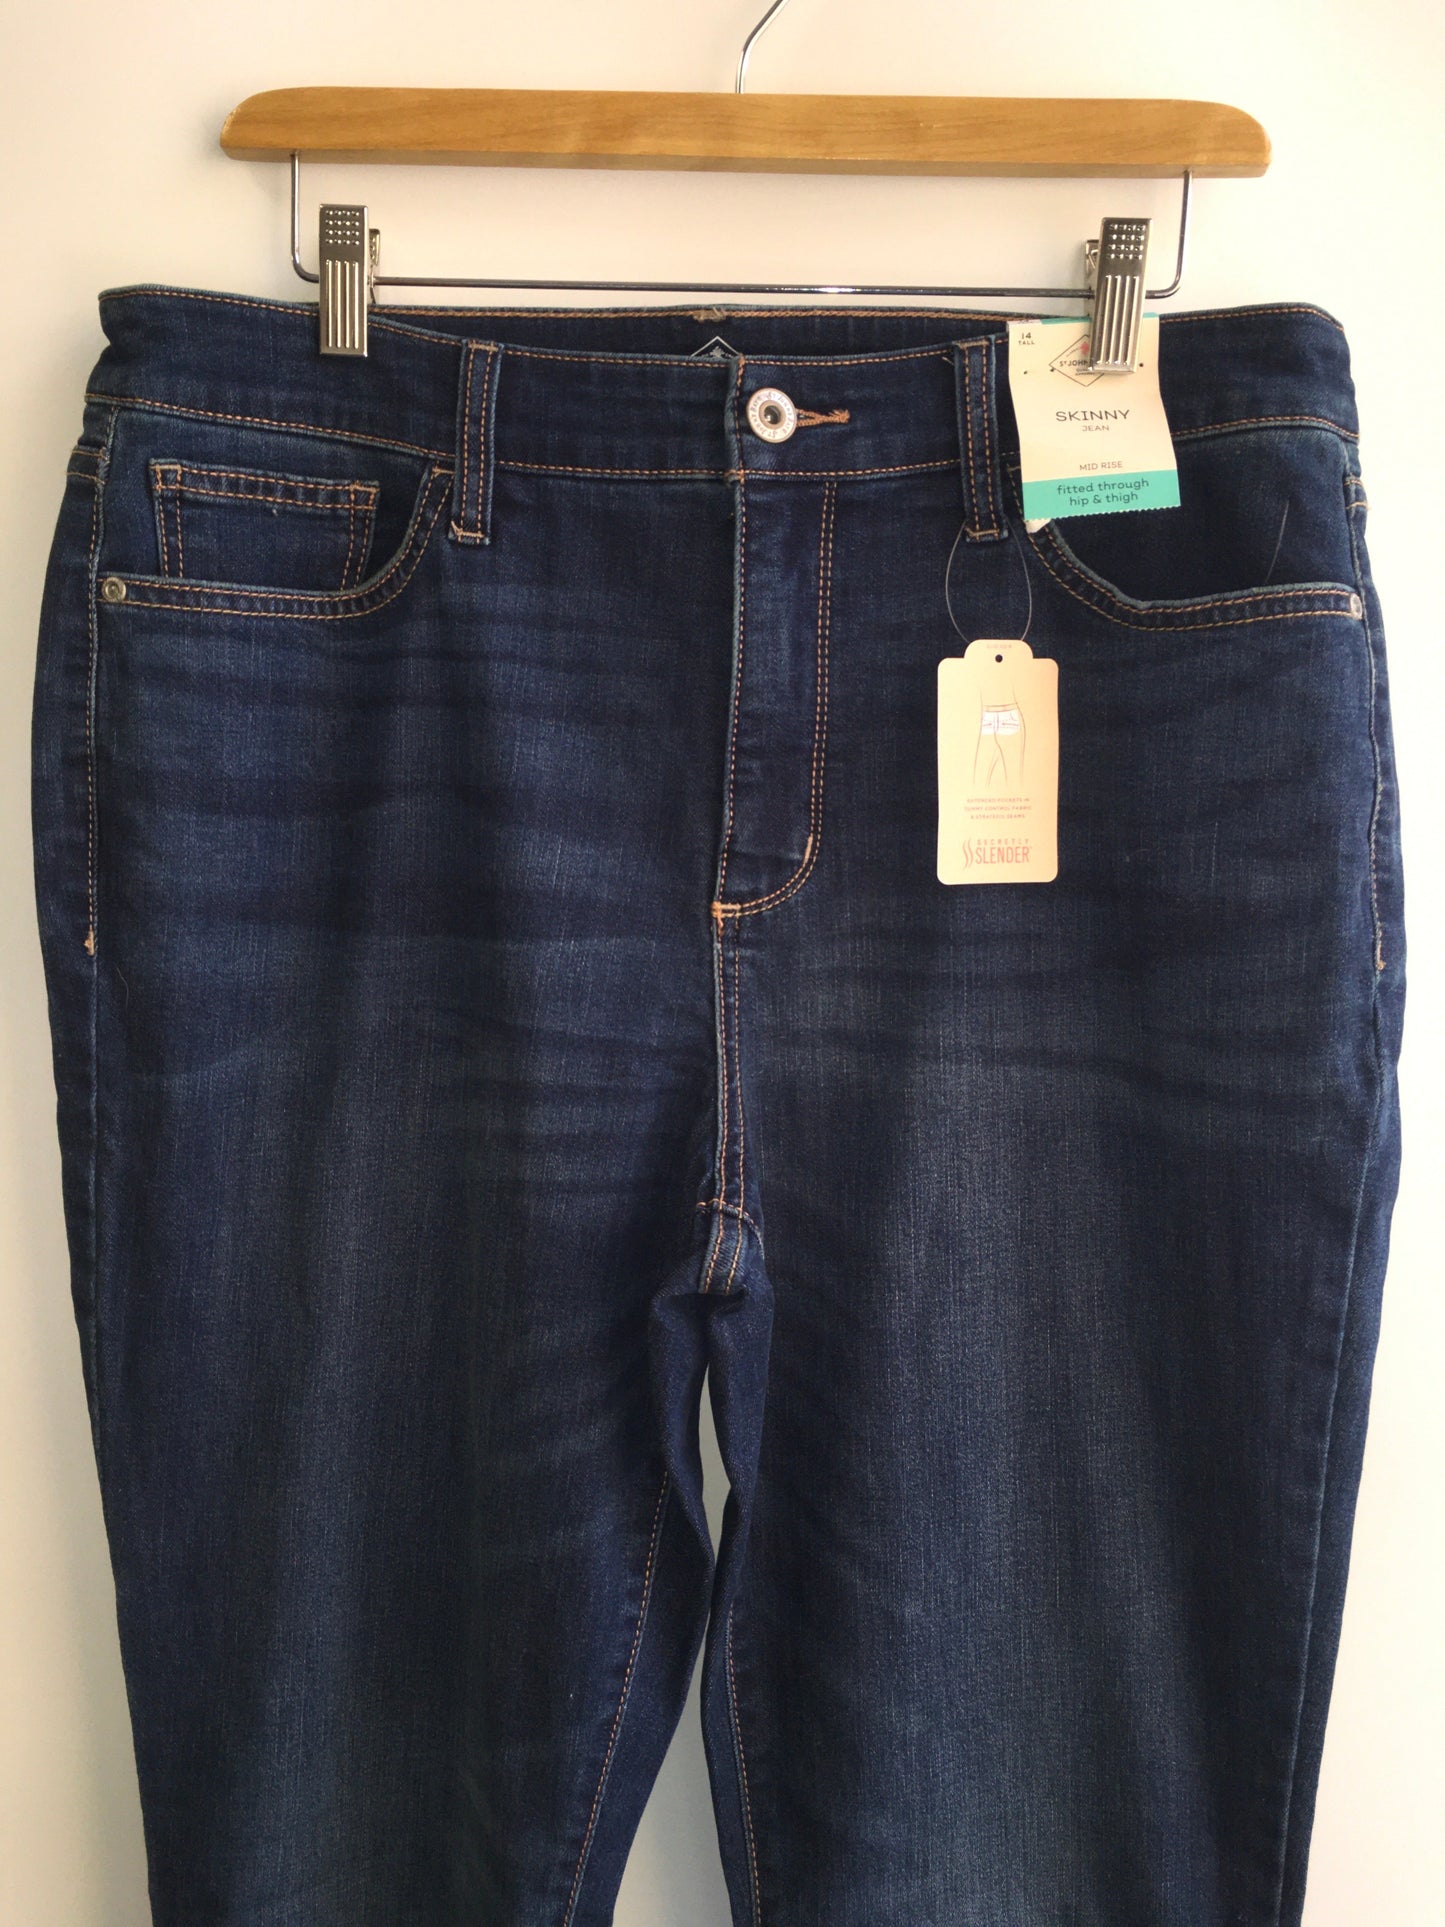 Jeans Skinny By St Johns Bay  Size: 14